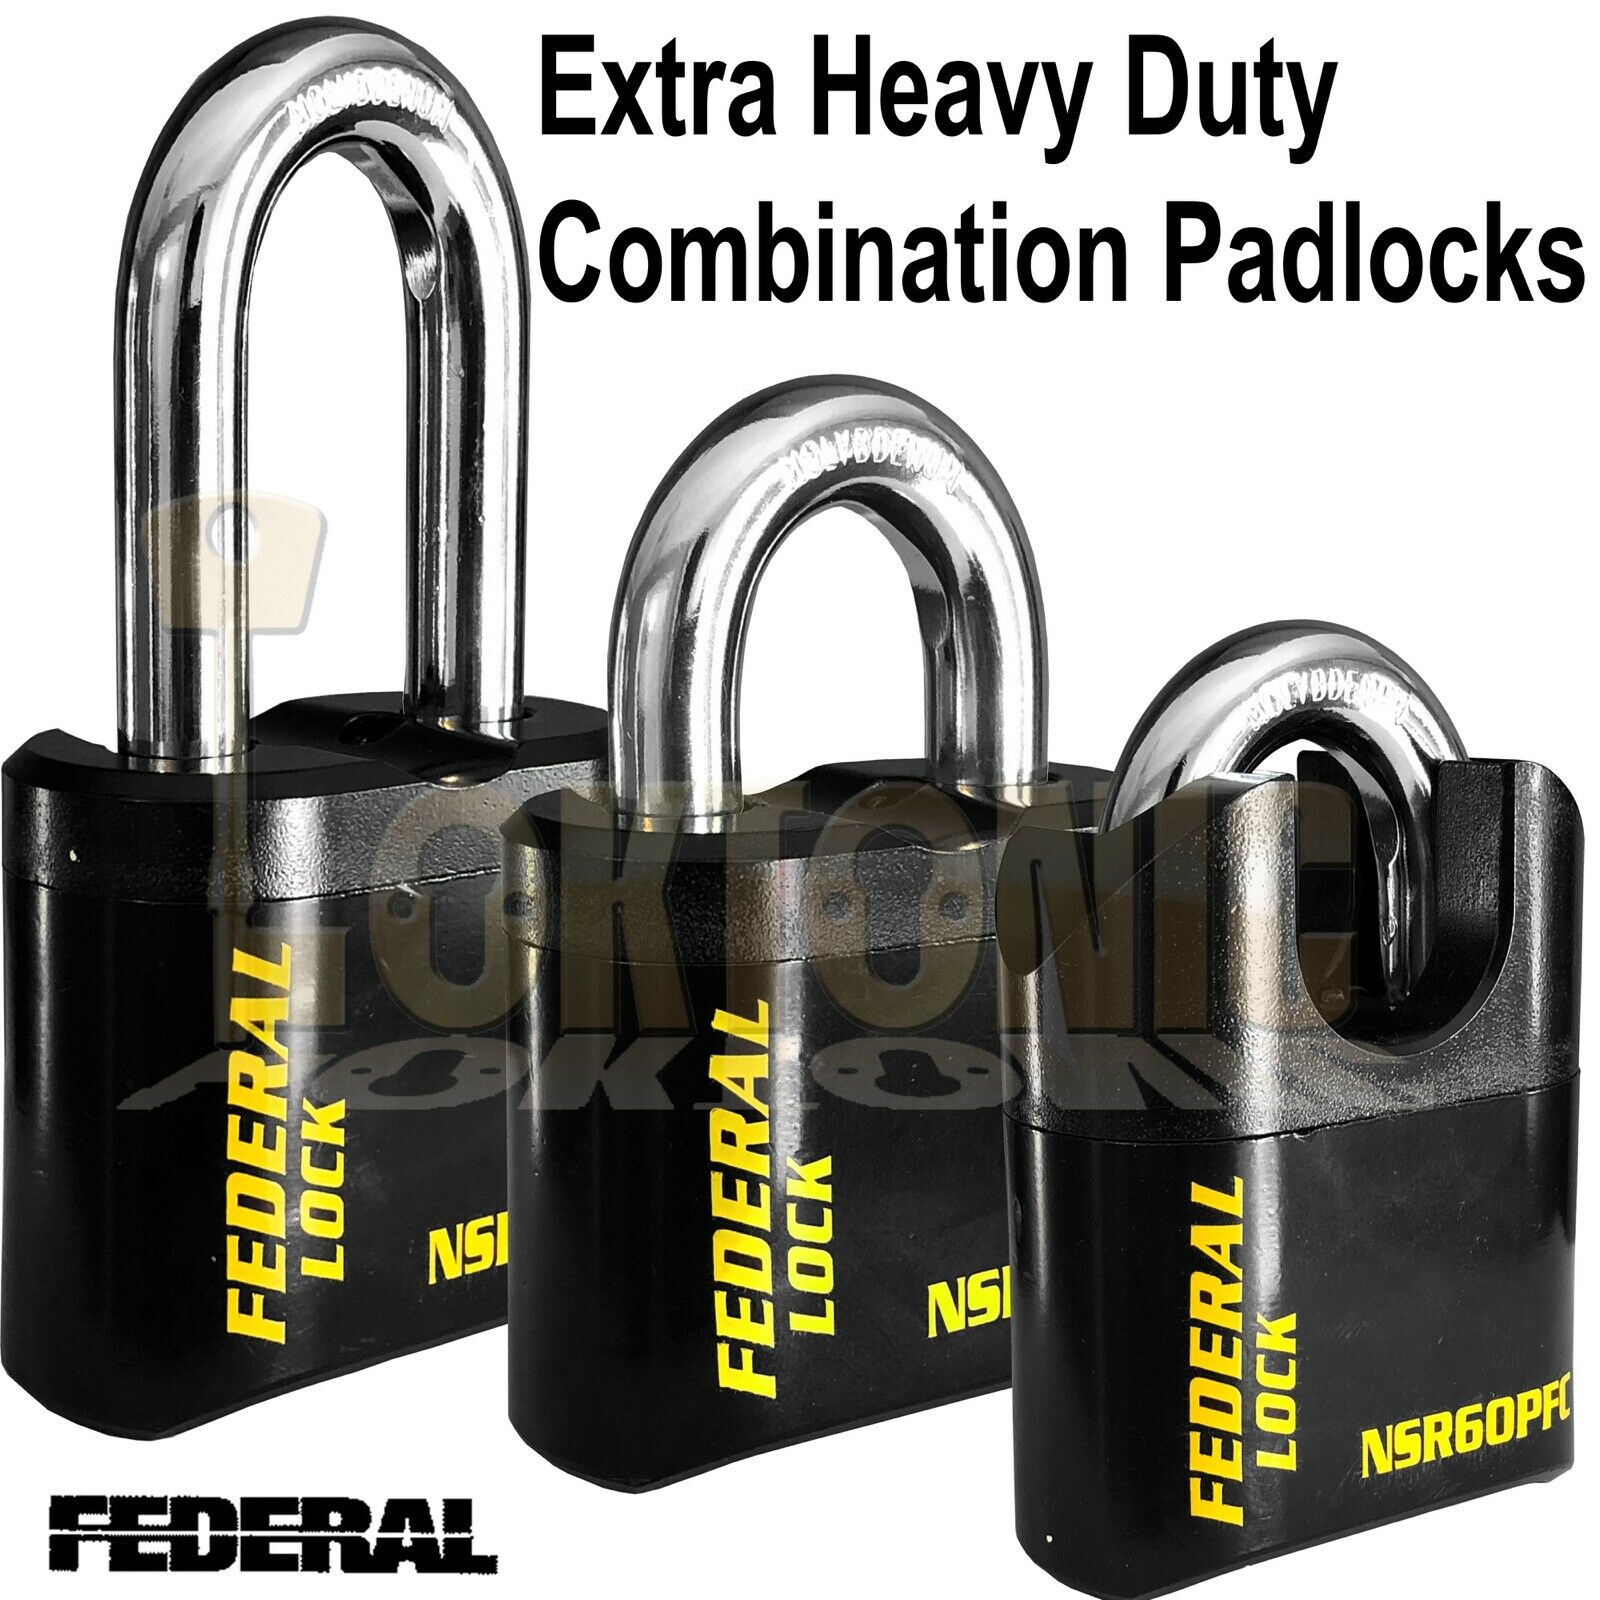 Super Heavy Duty High Security Combination Padlock – SCOTTLOCK